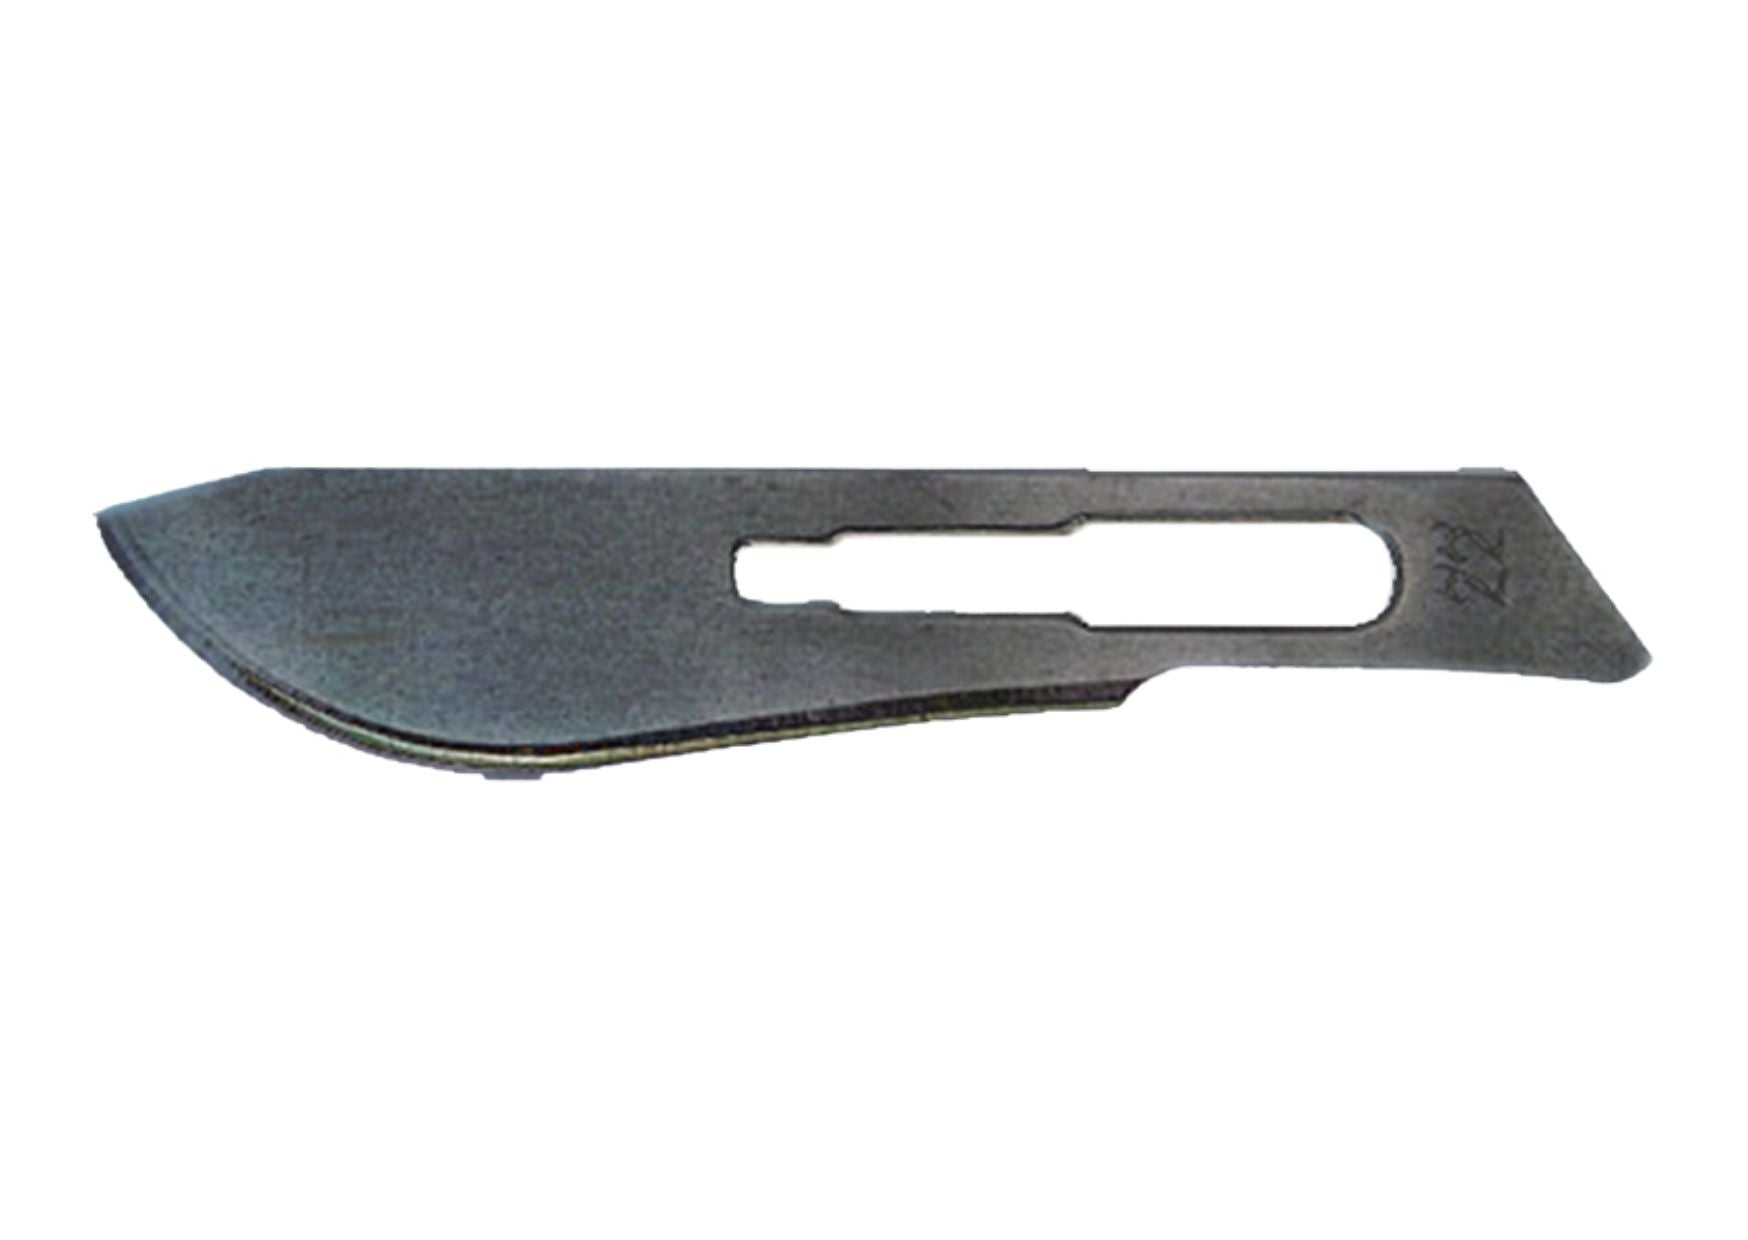 Lavabi's scalpel blades